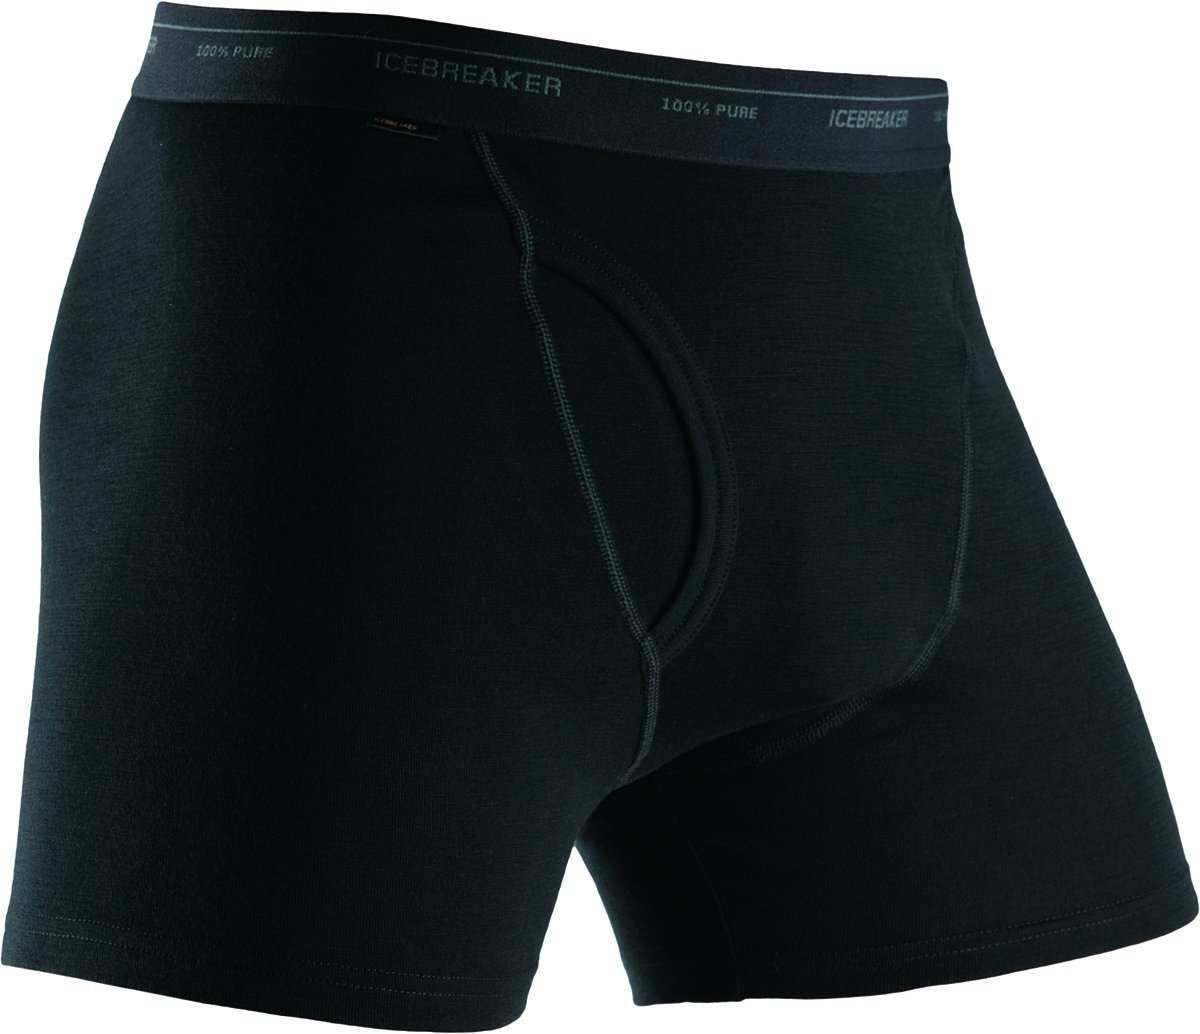 MENS EDAY BXRWFLY - Men's underpants